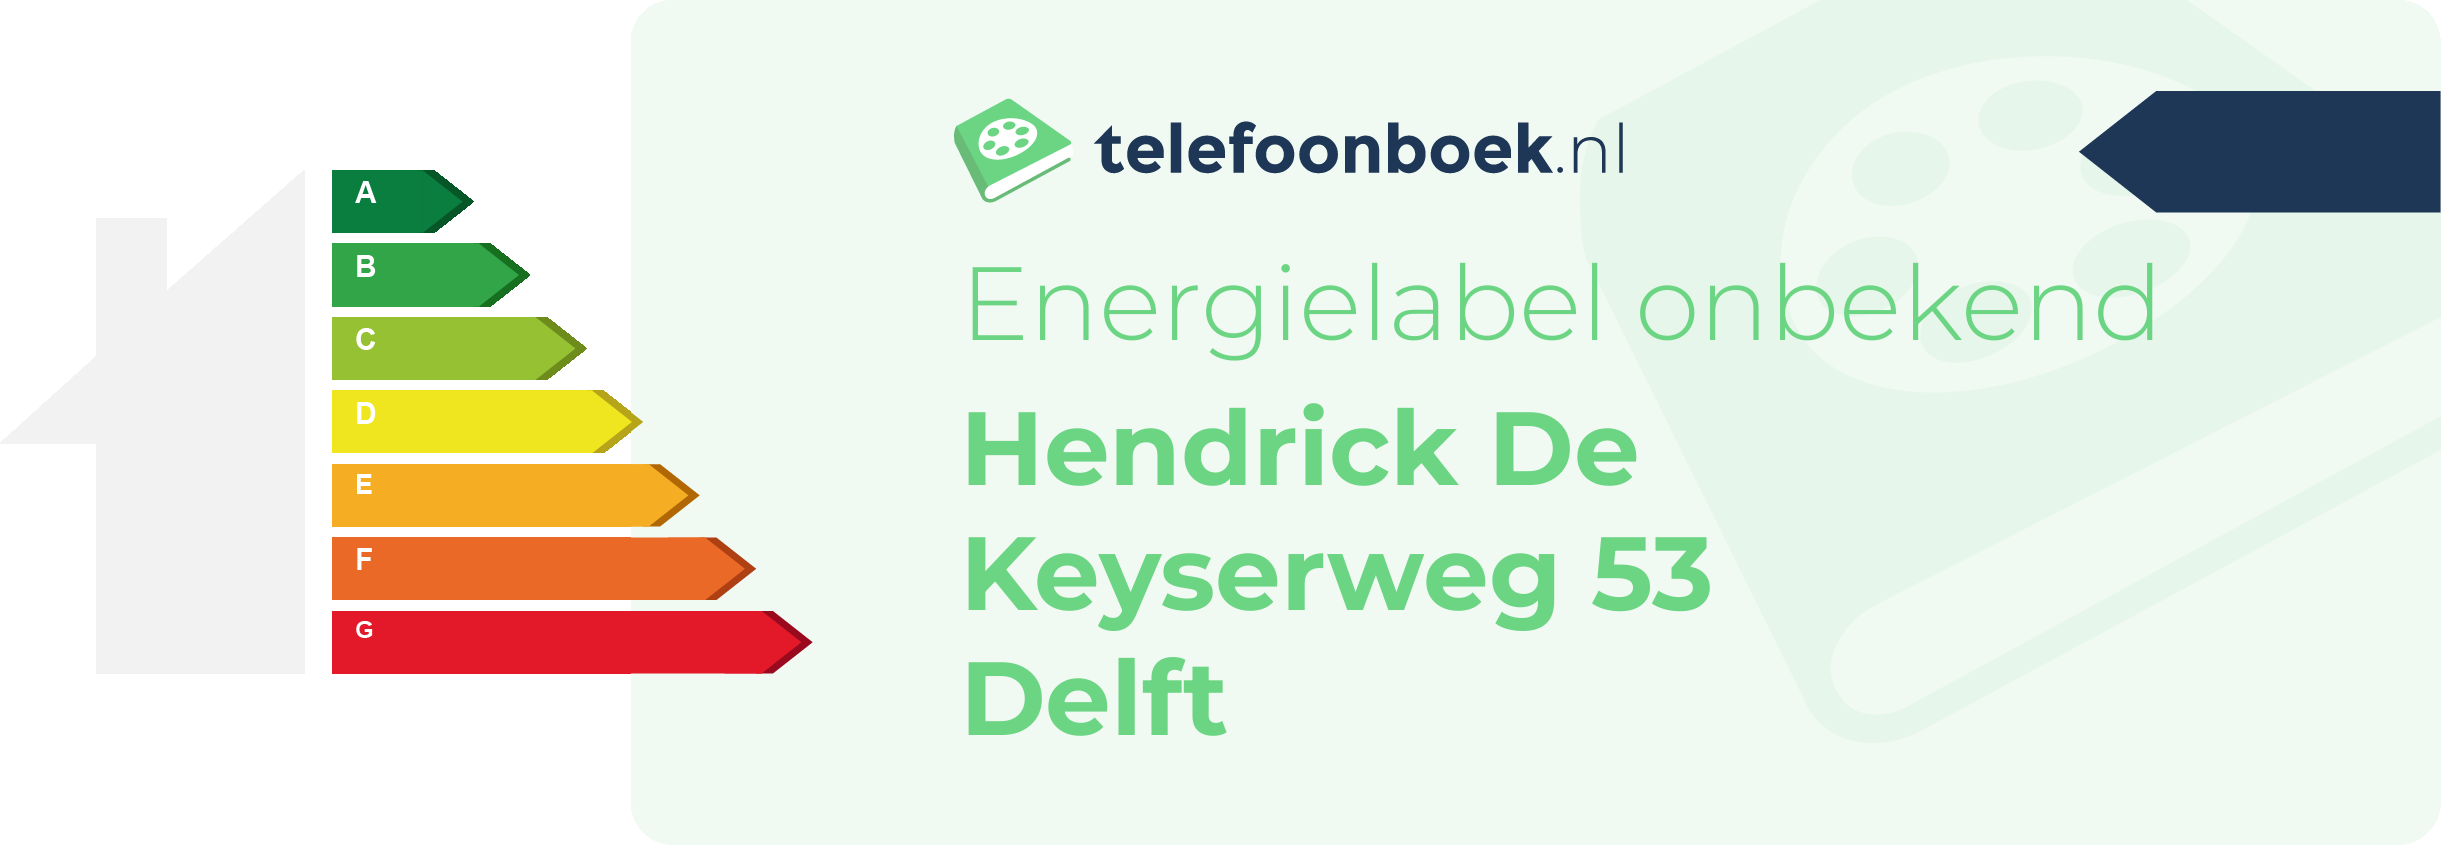 Energielabel Hendrick De Keyserweg 53 Delft